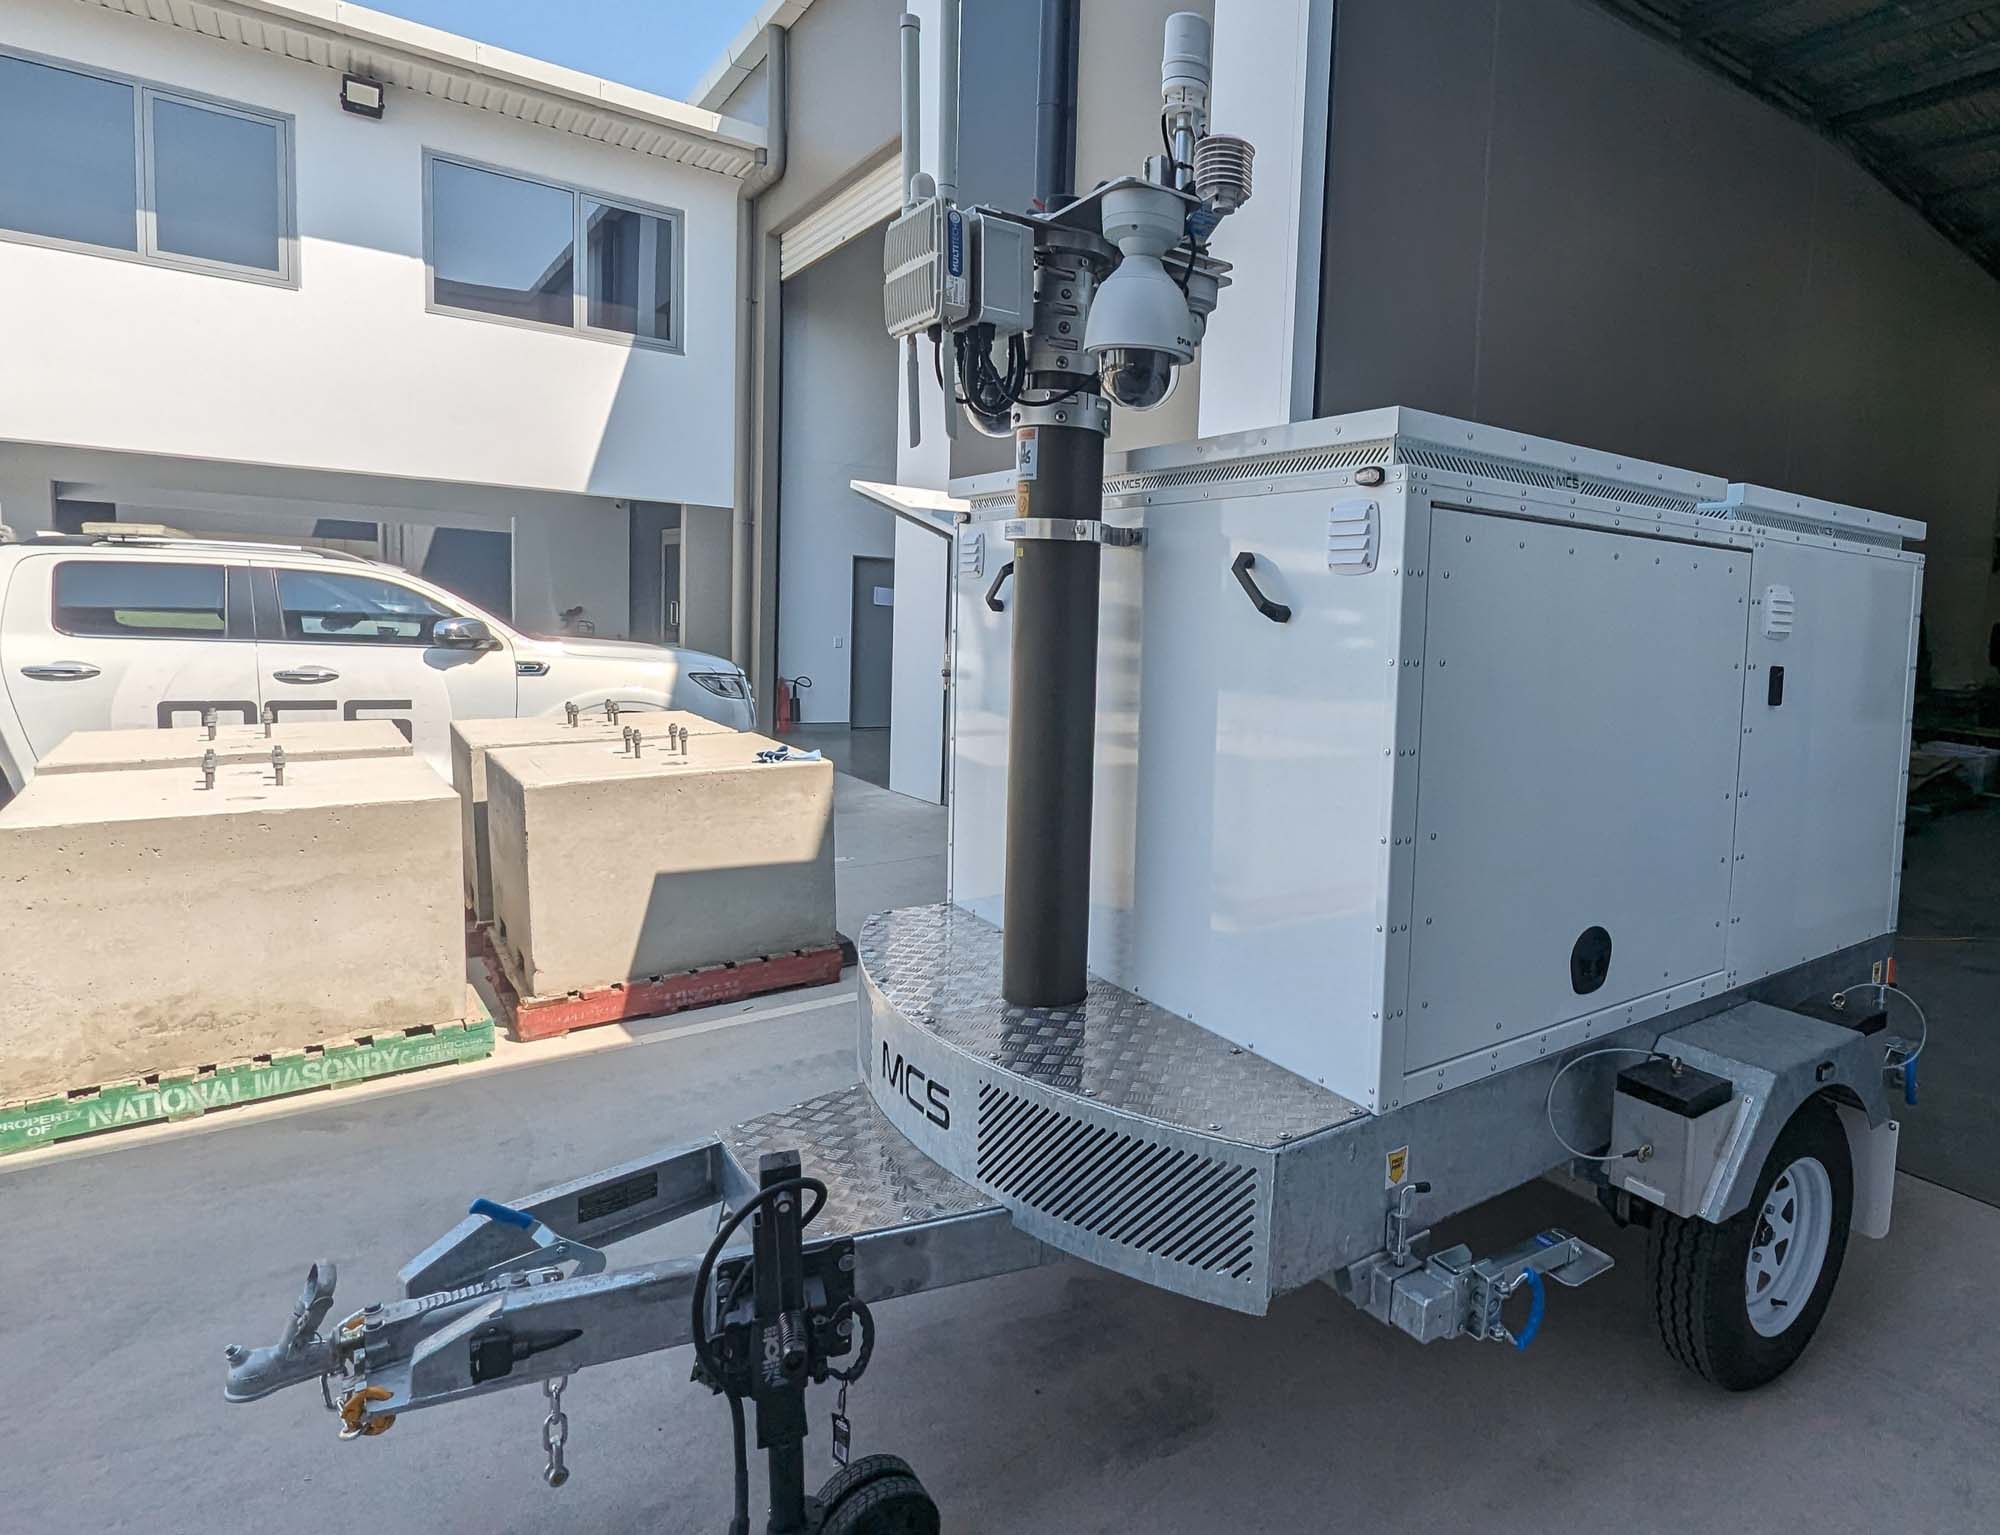 The inside electronics of a solar surveillance trailer